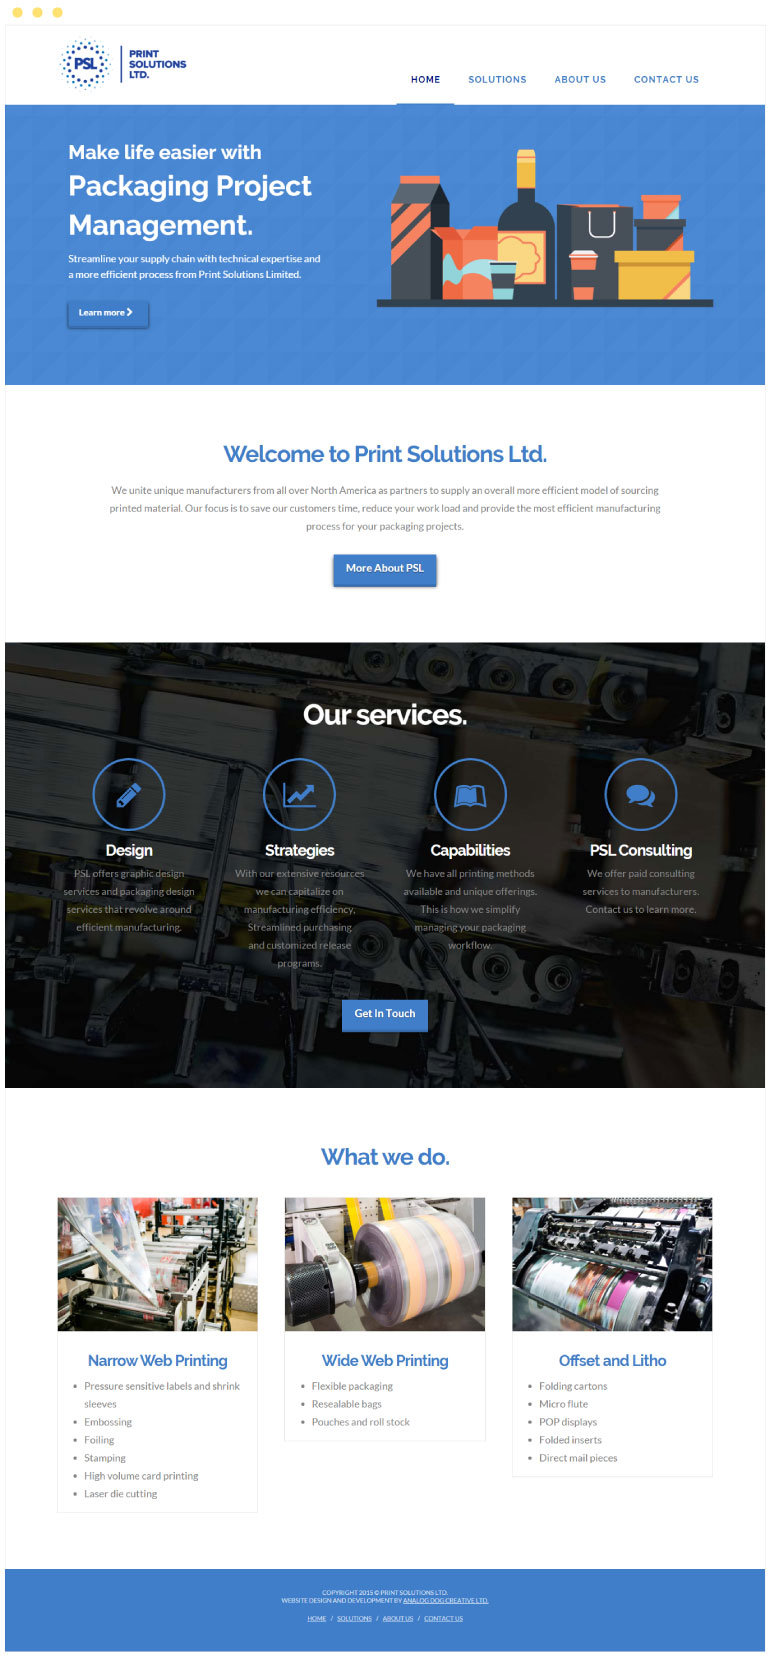 Print Solutions Ltd. Website #1